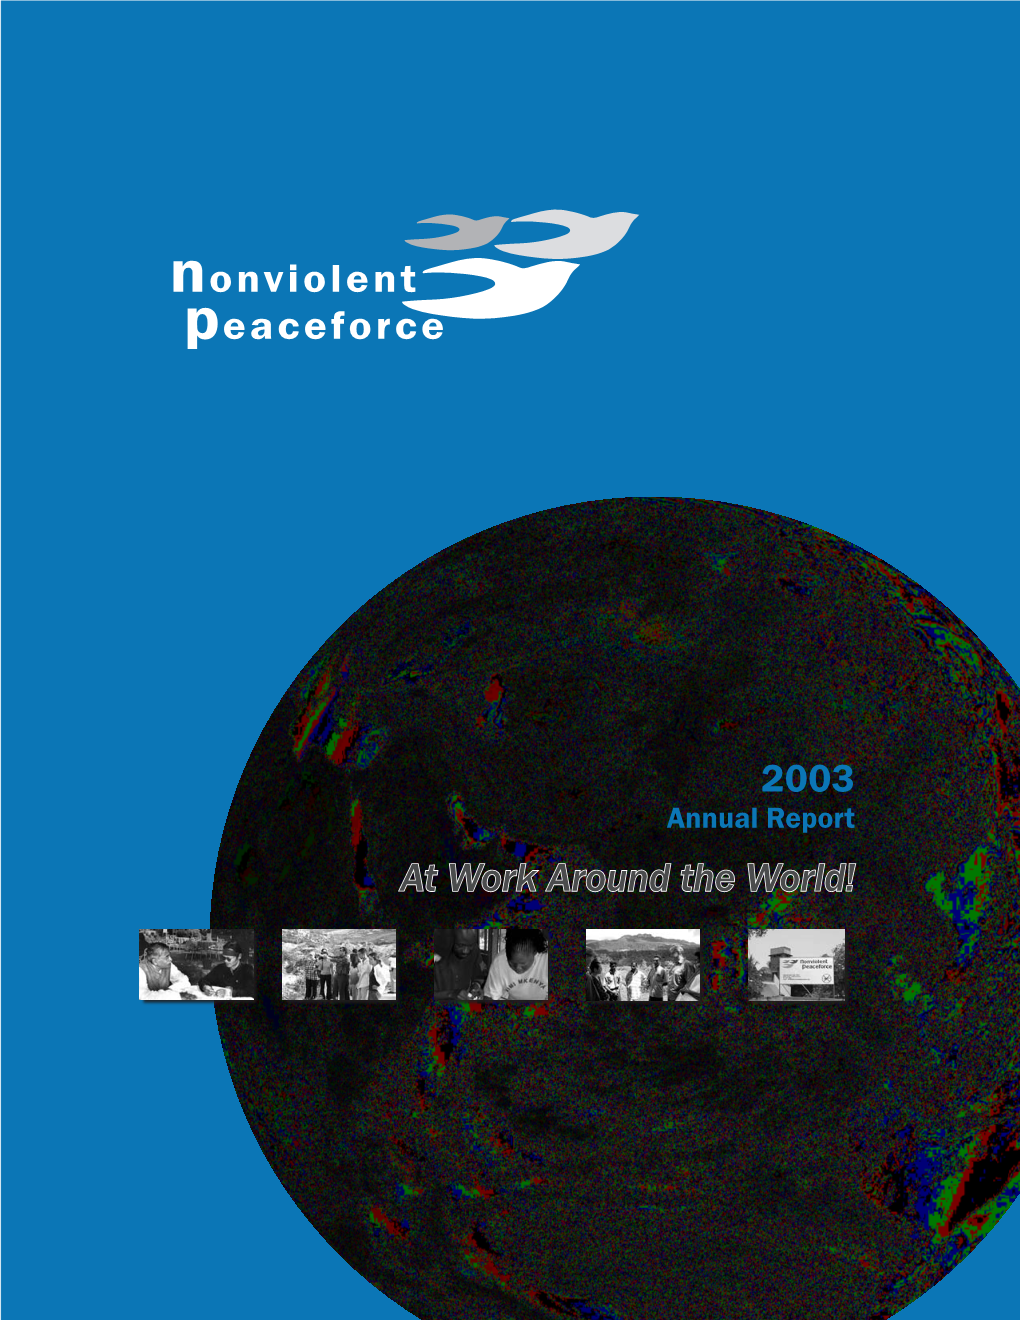 Peaceforce Nonviolent at Work Around the World! 2003